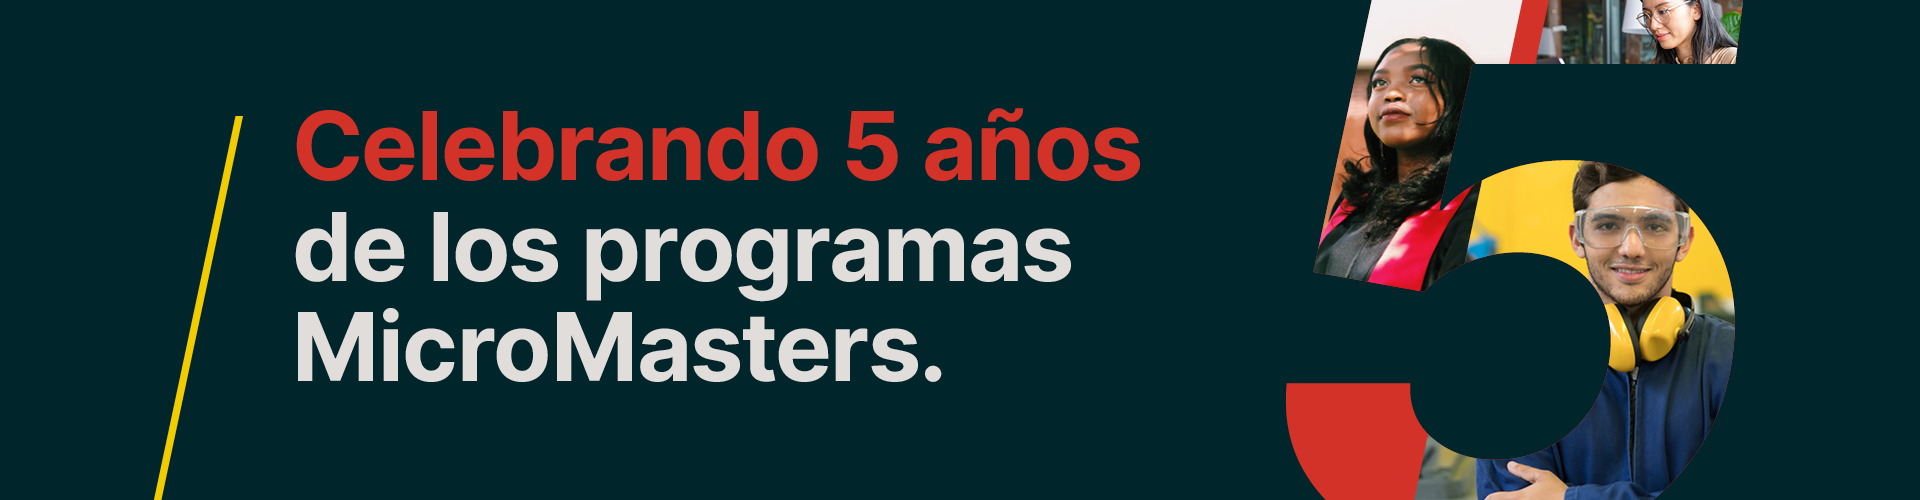 MicroMasters 5th-Anniversary Landingpage-Promo Spanish